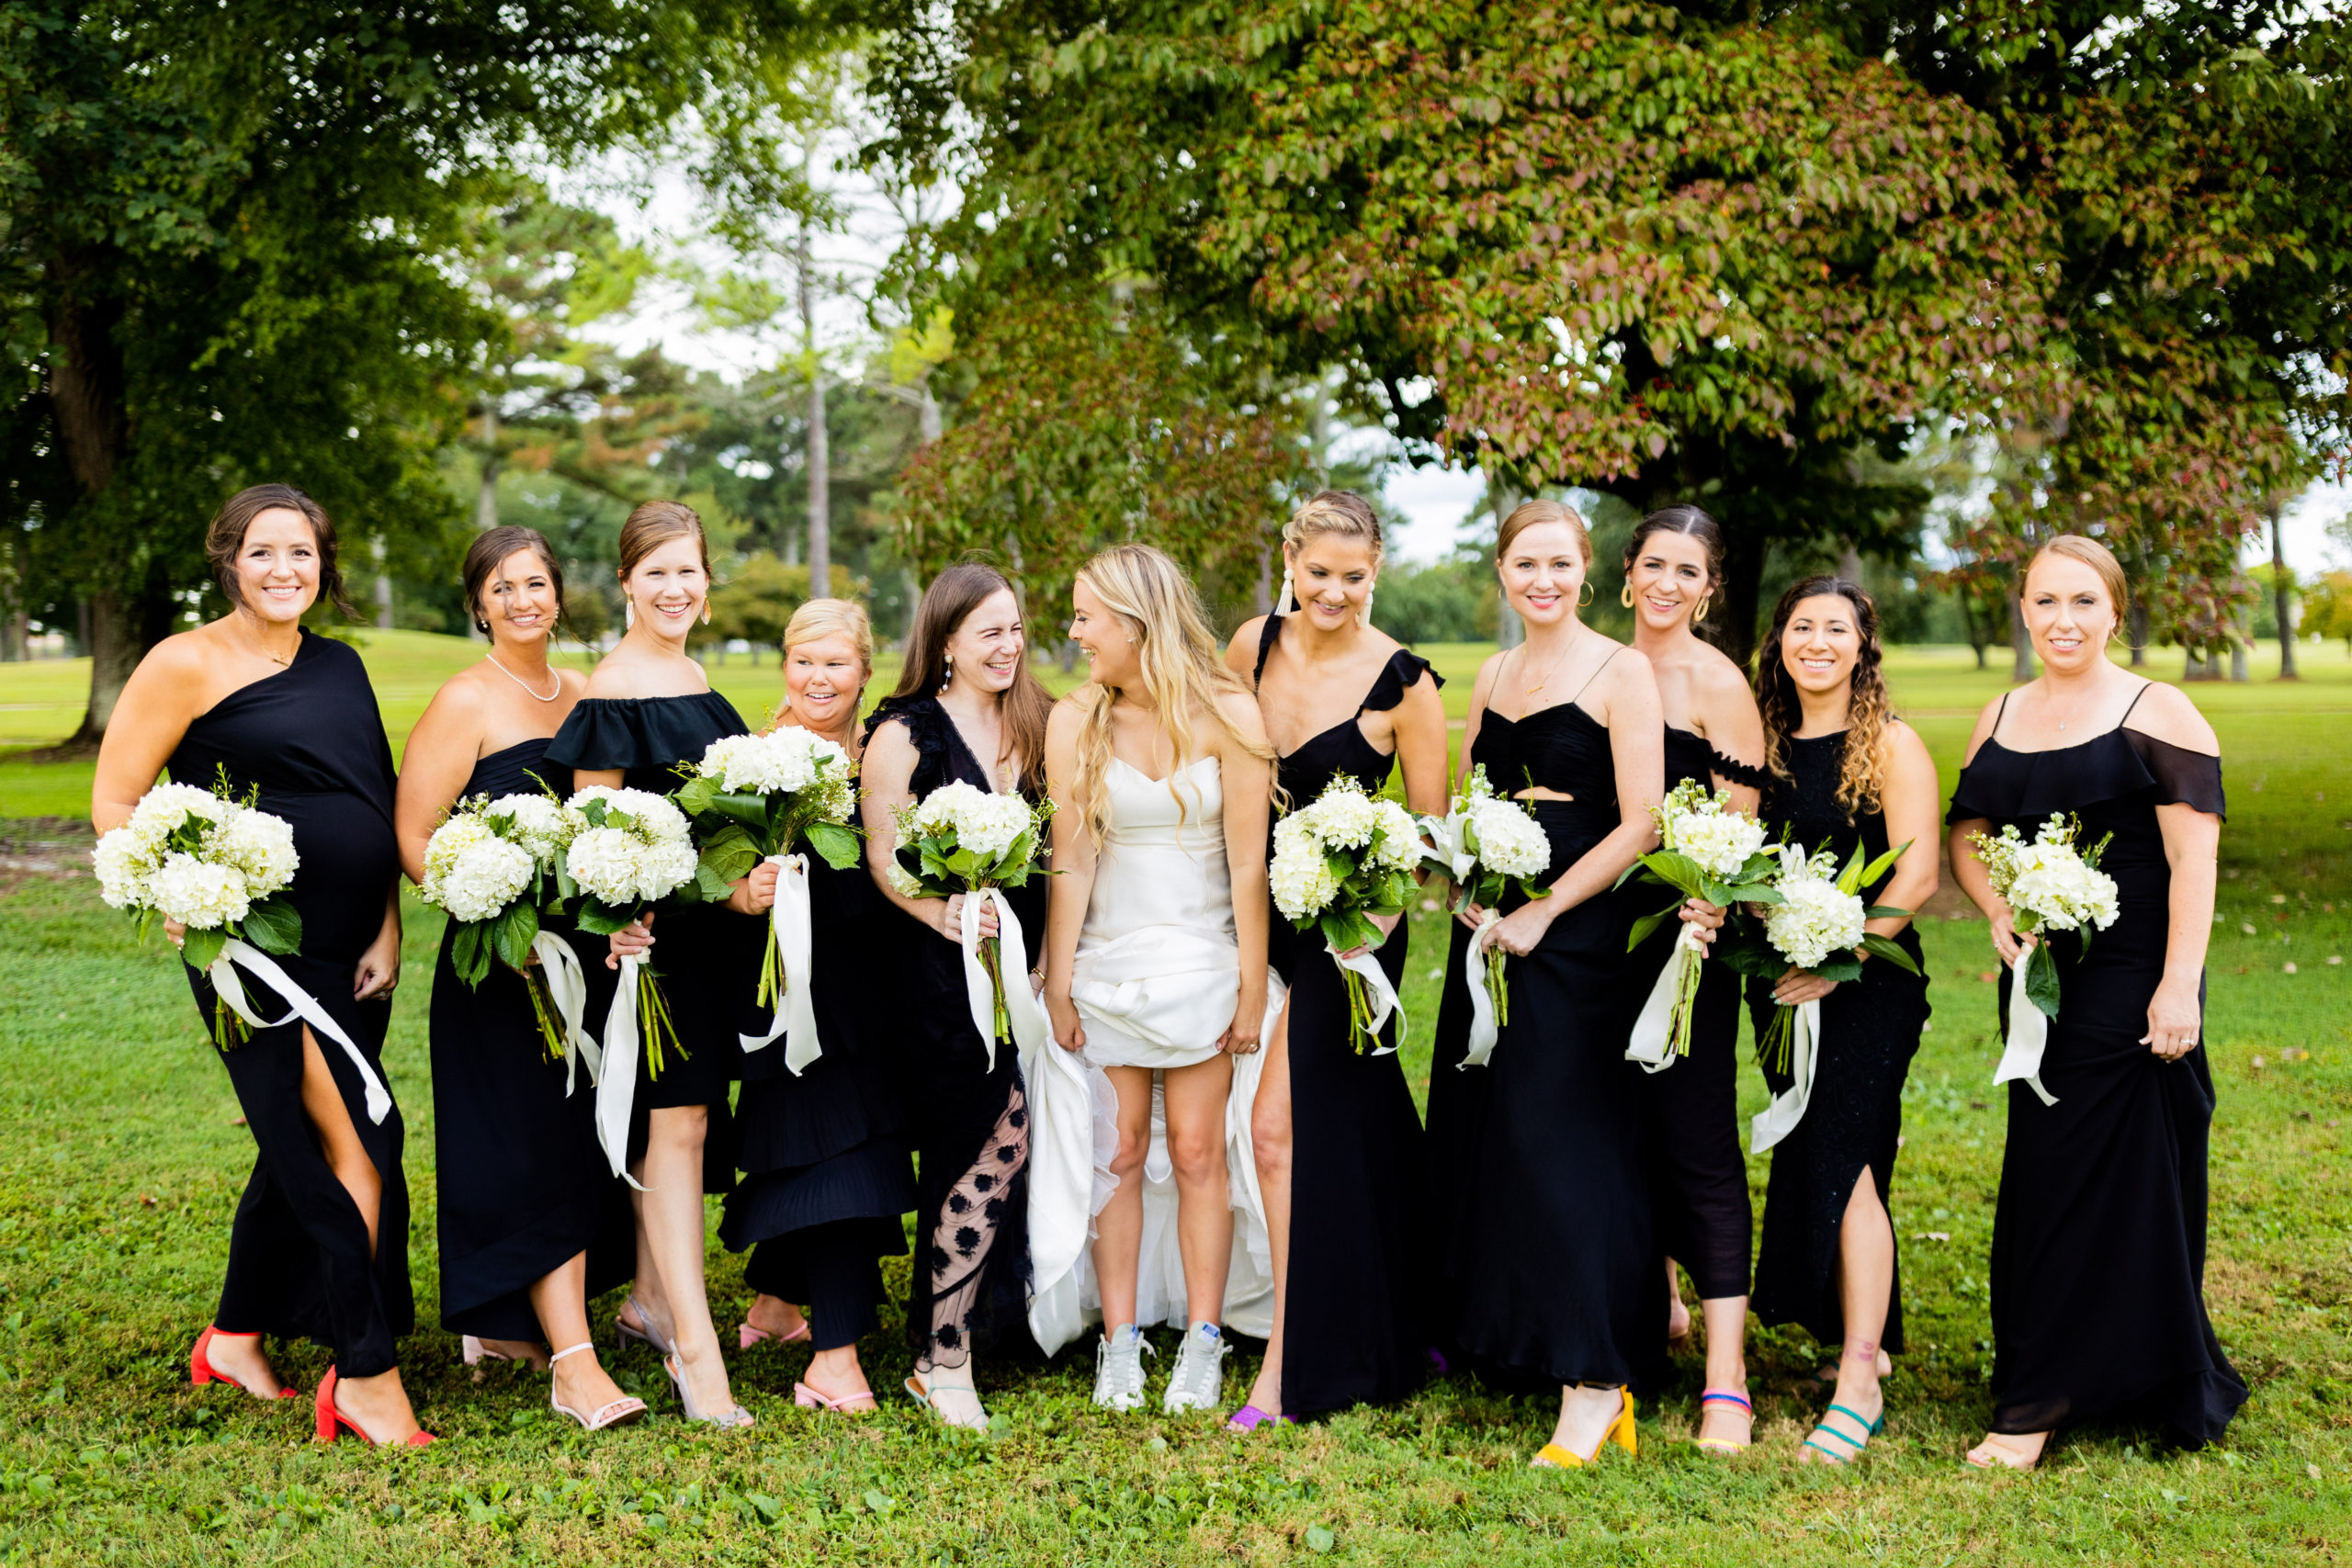 Eleanor Stenner Photography - a Birmingham, AL wedding photographer - shares where to buy bridesmaid dresses online